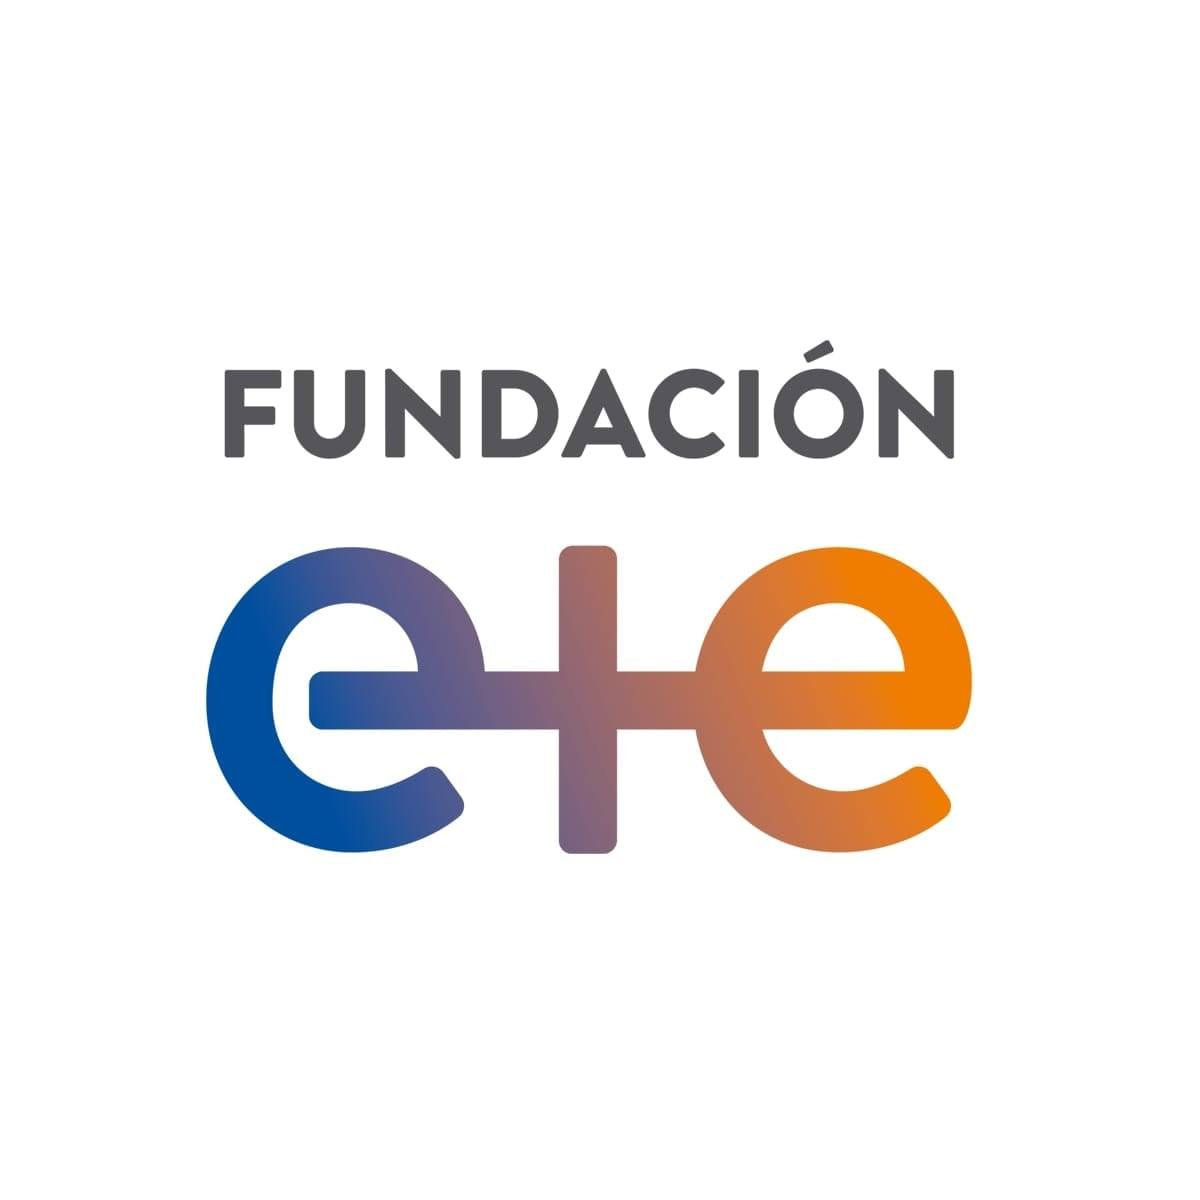 ¡Atentos emprendedores! Fundación E+E lanza una nueva capacitación • Canal C